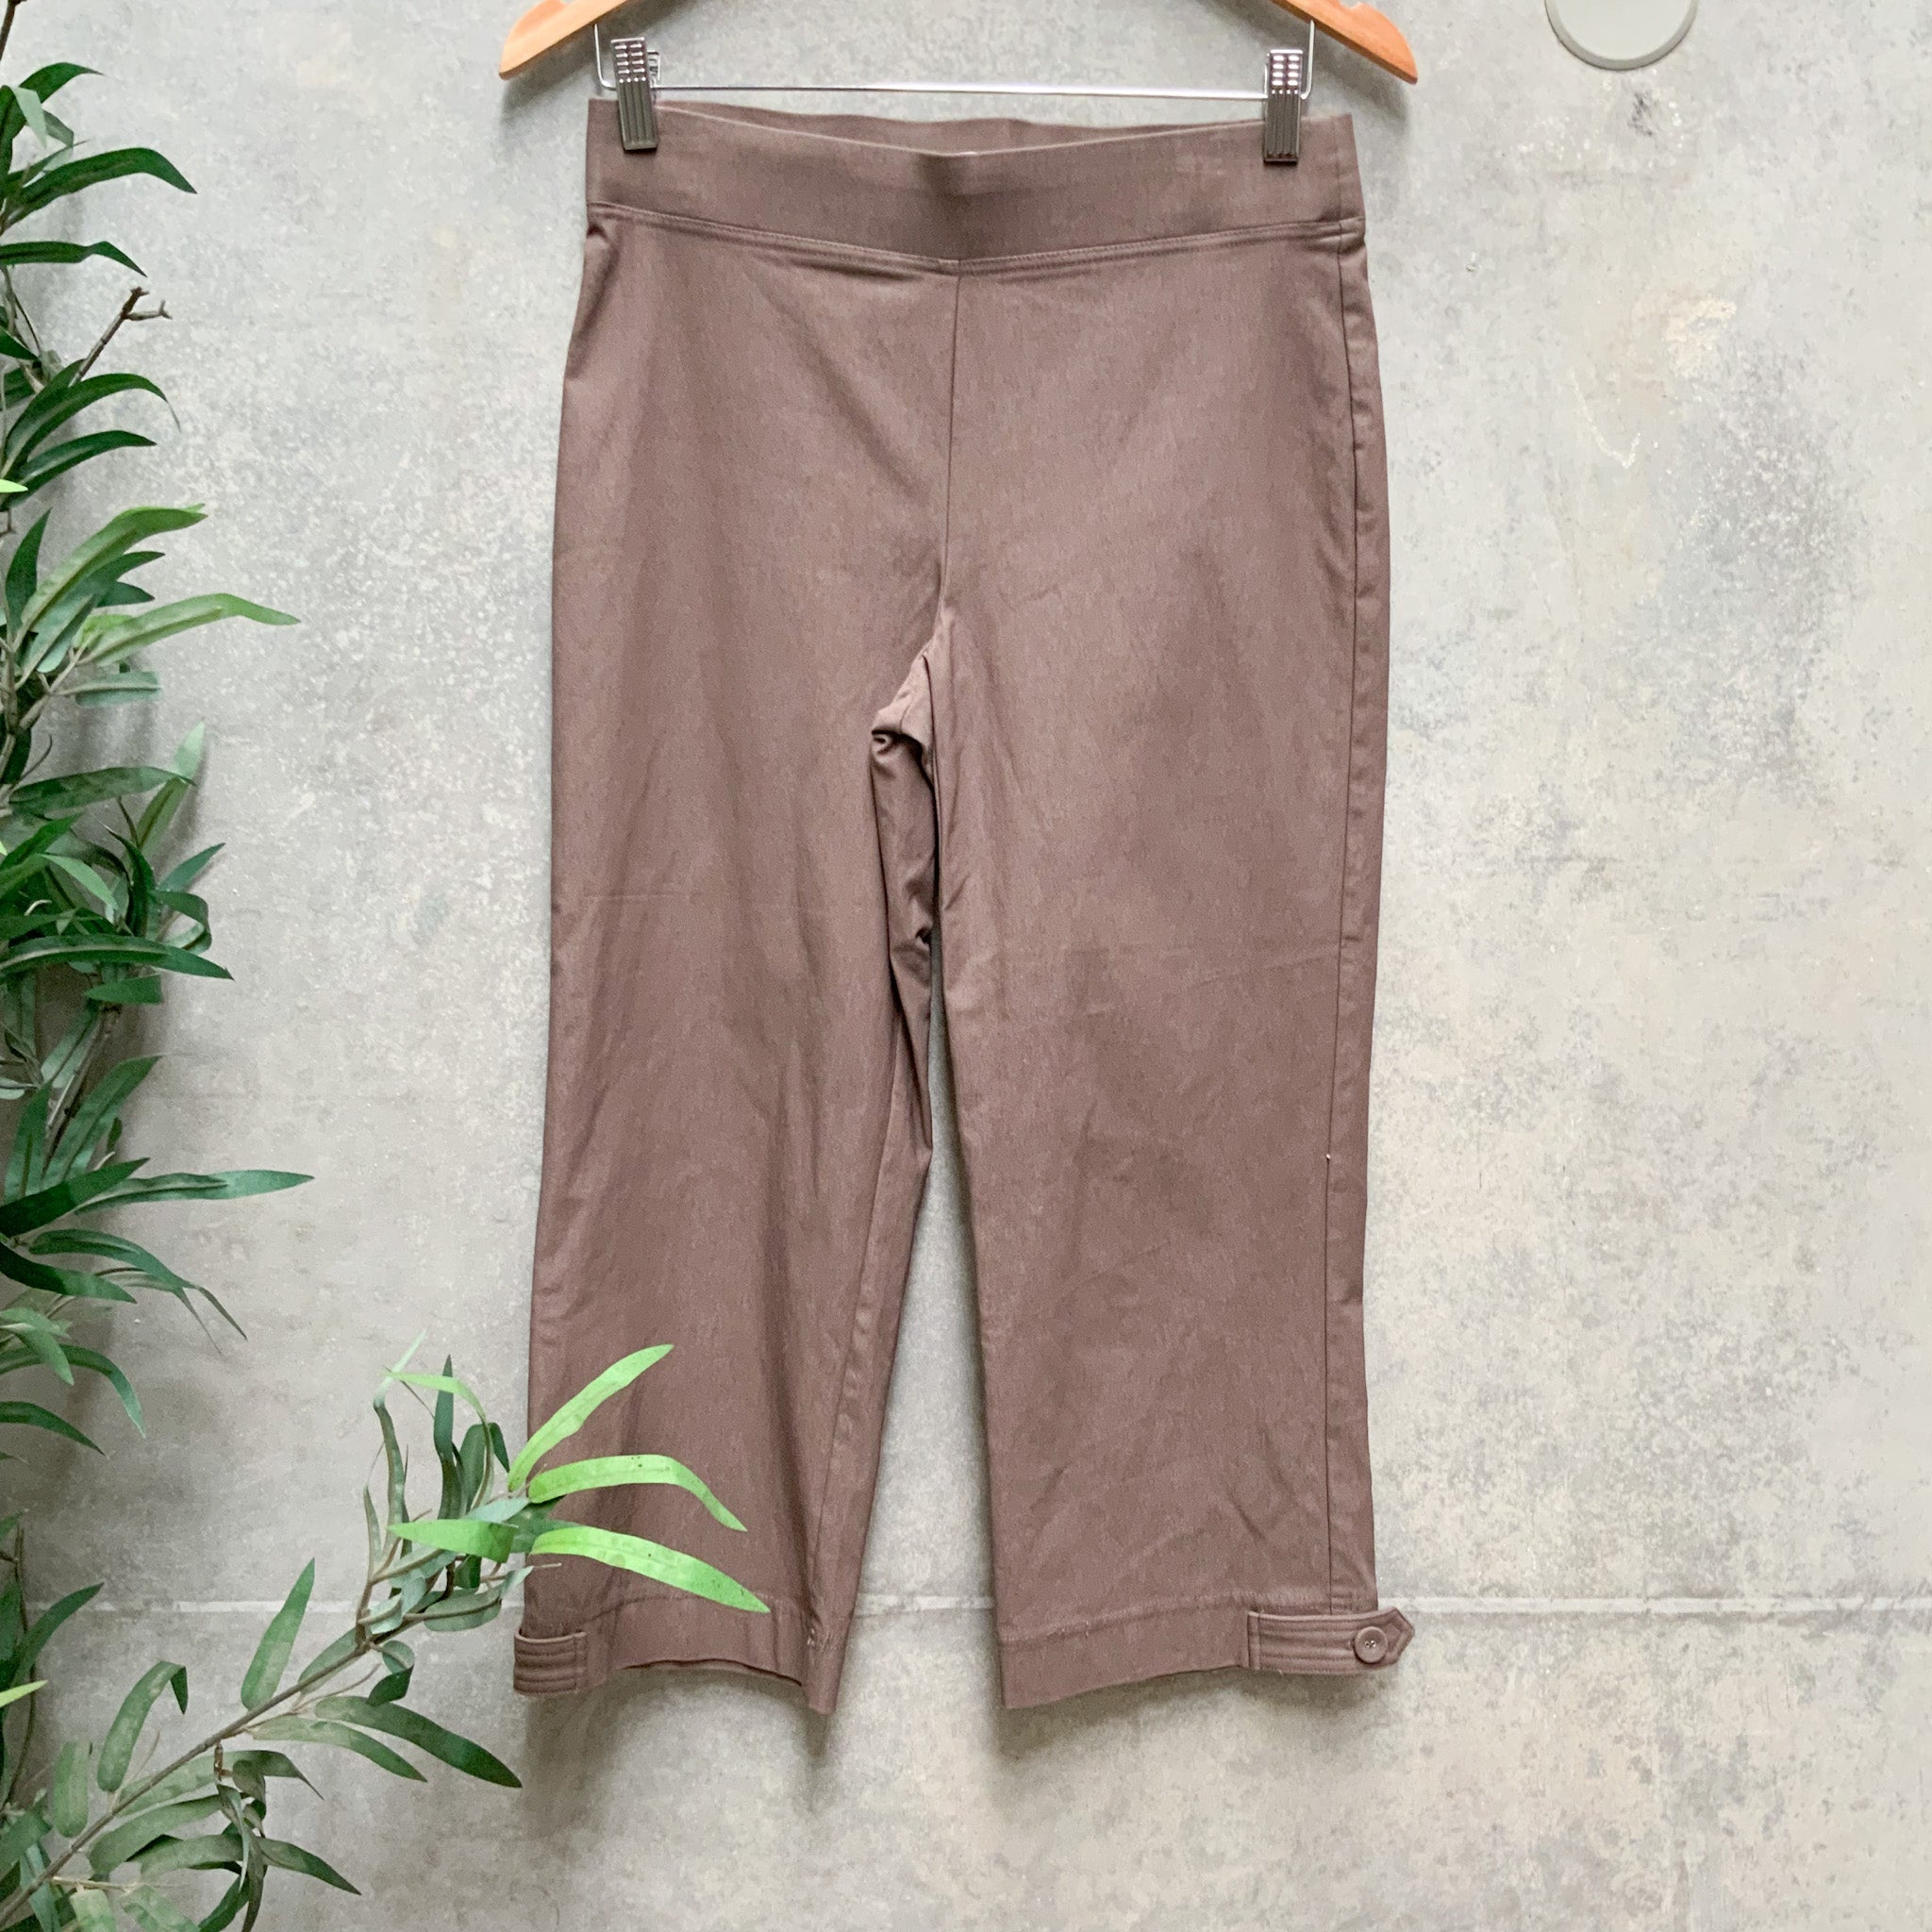 REGATTA Ladies Brown Elastic Waist 3/4 Capri Pants - Size 10 – The